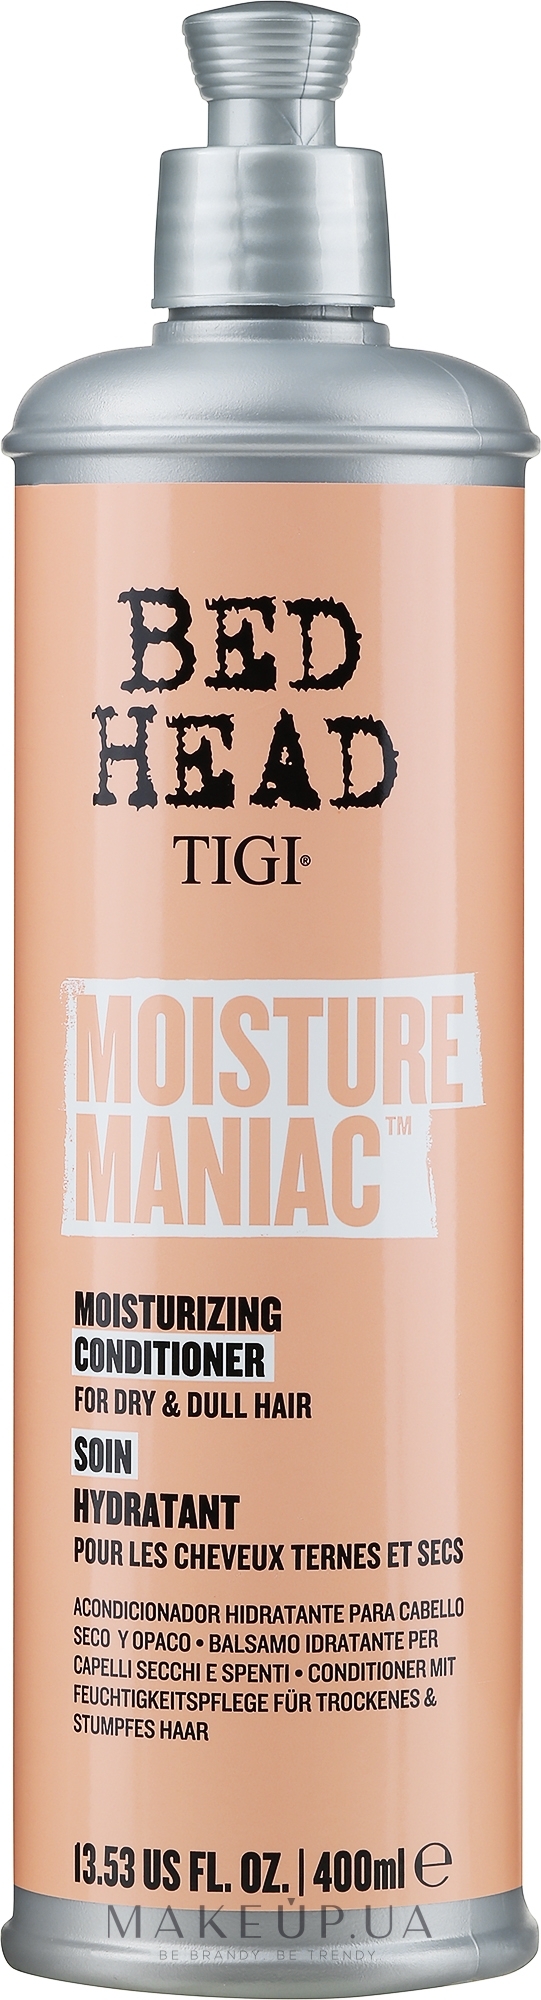 Tigi Bed Head Moisture Maniac Shampoo Shampoo donna 750 ml